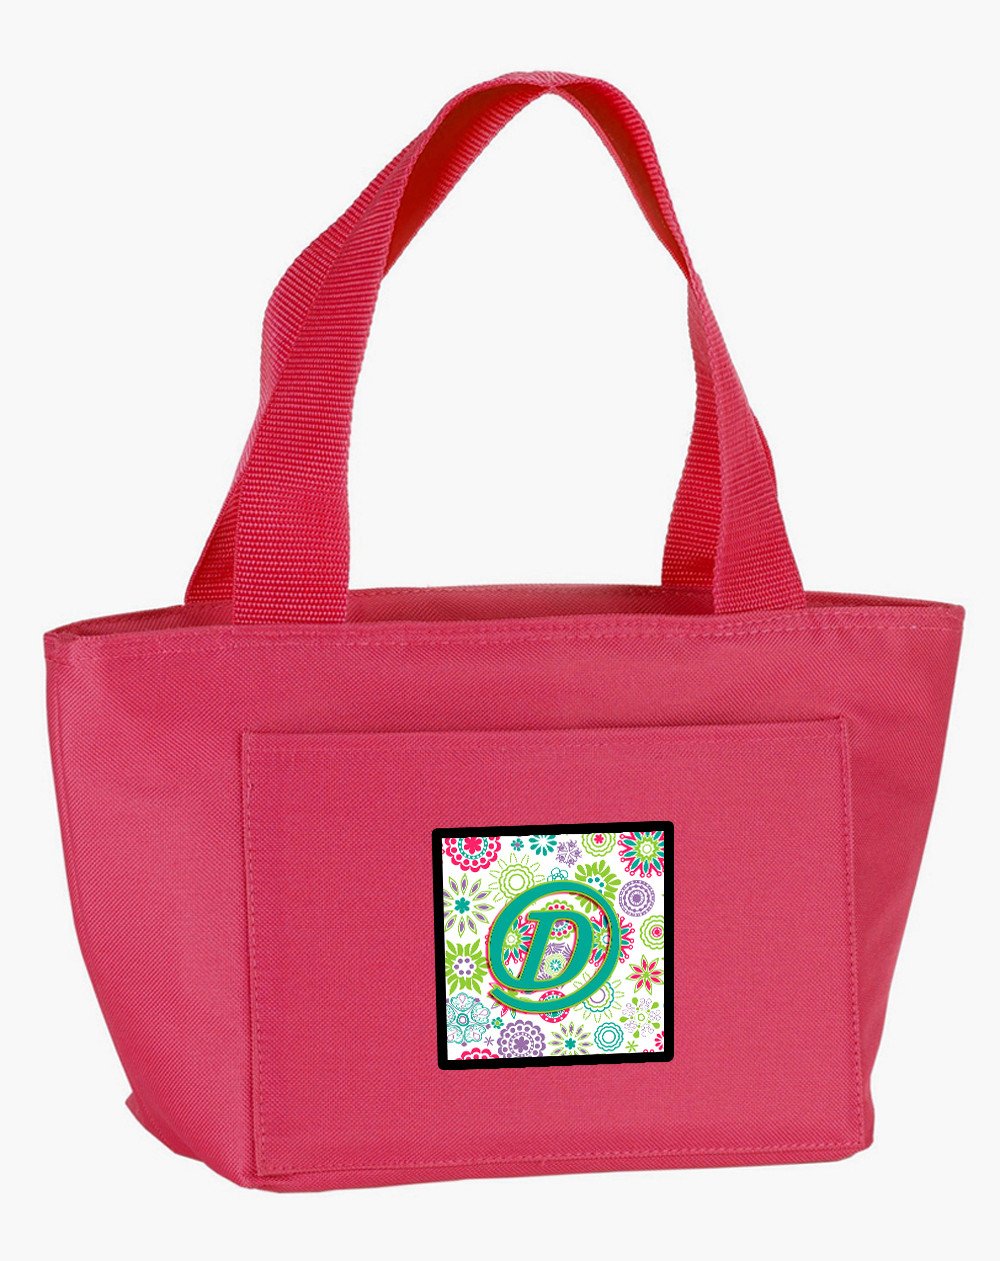 Letter D Flowers Pink Teal Green Initial Lunch Bag CJ2011-DPK-8808 by Caroline's Treasures